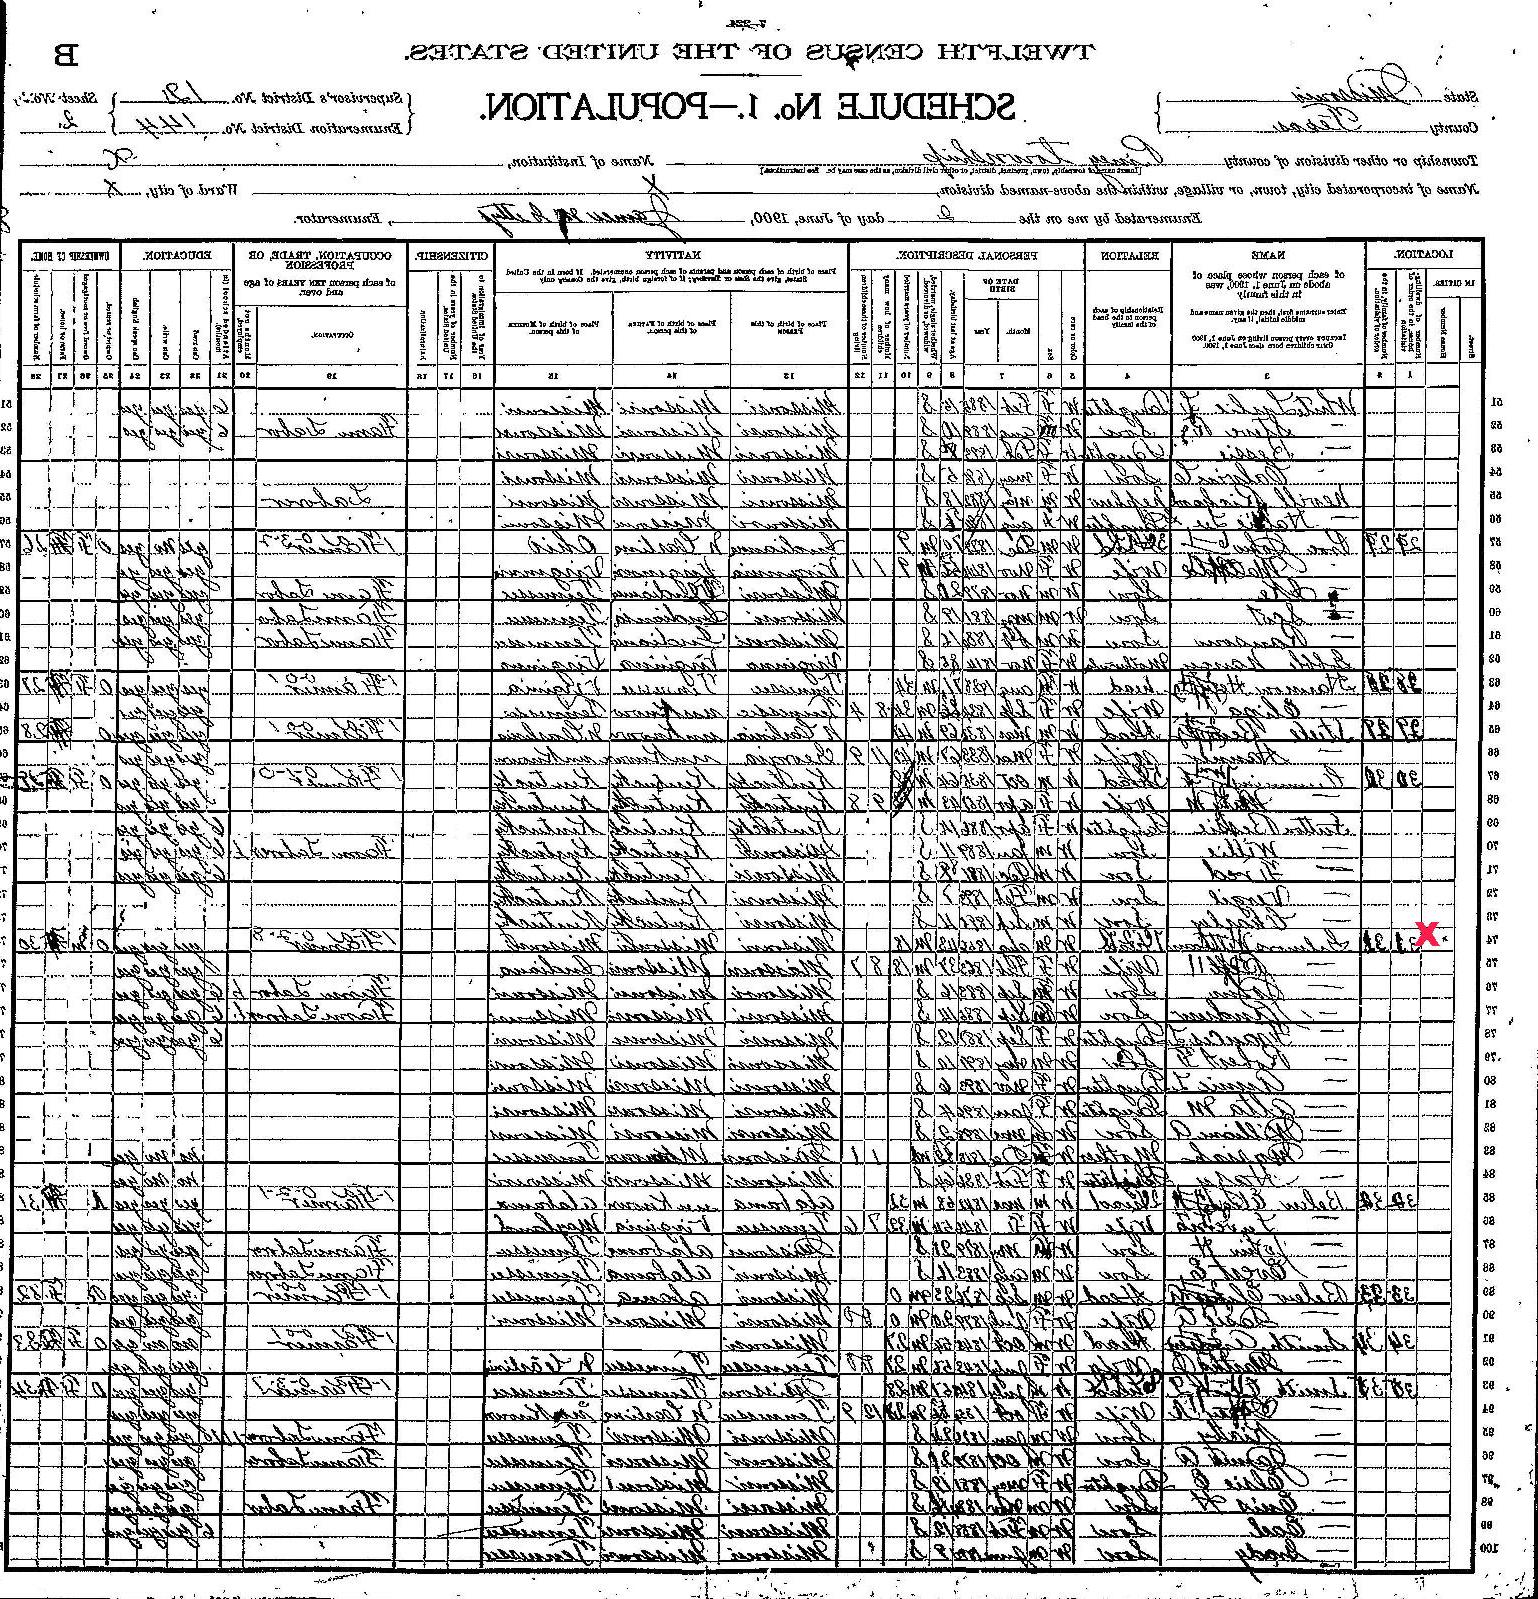 ISABELLE MCKINNEY, b. Feb 1863, Missouri; d. 1930. 1900 Census Texas County,